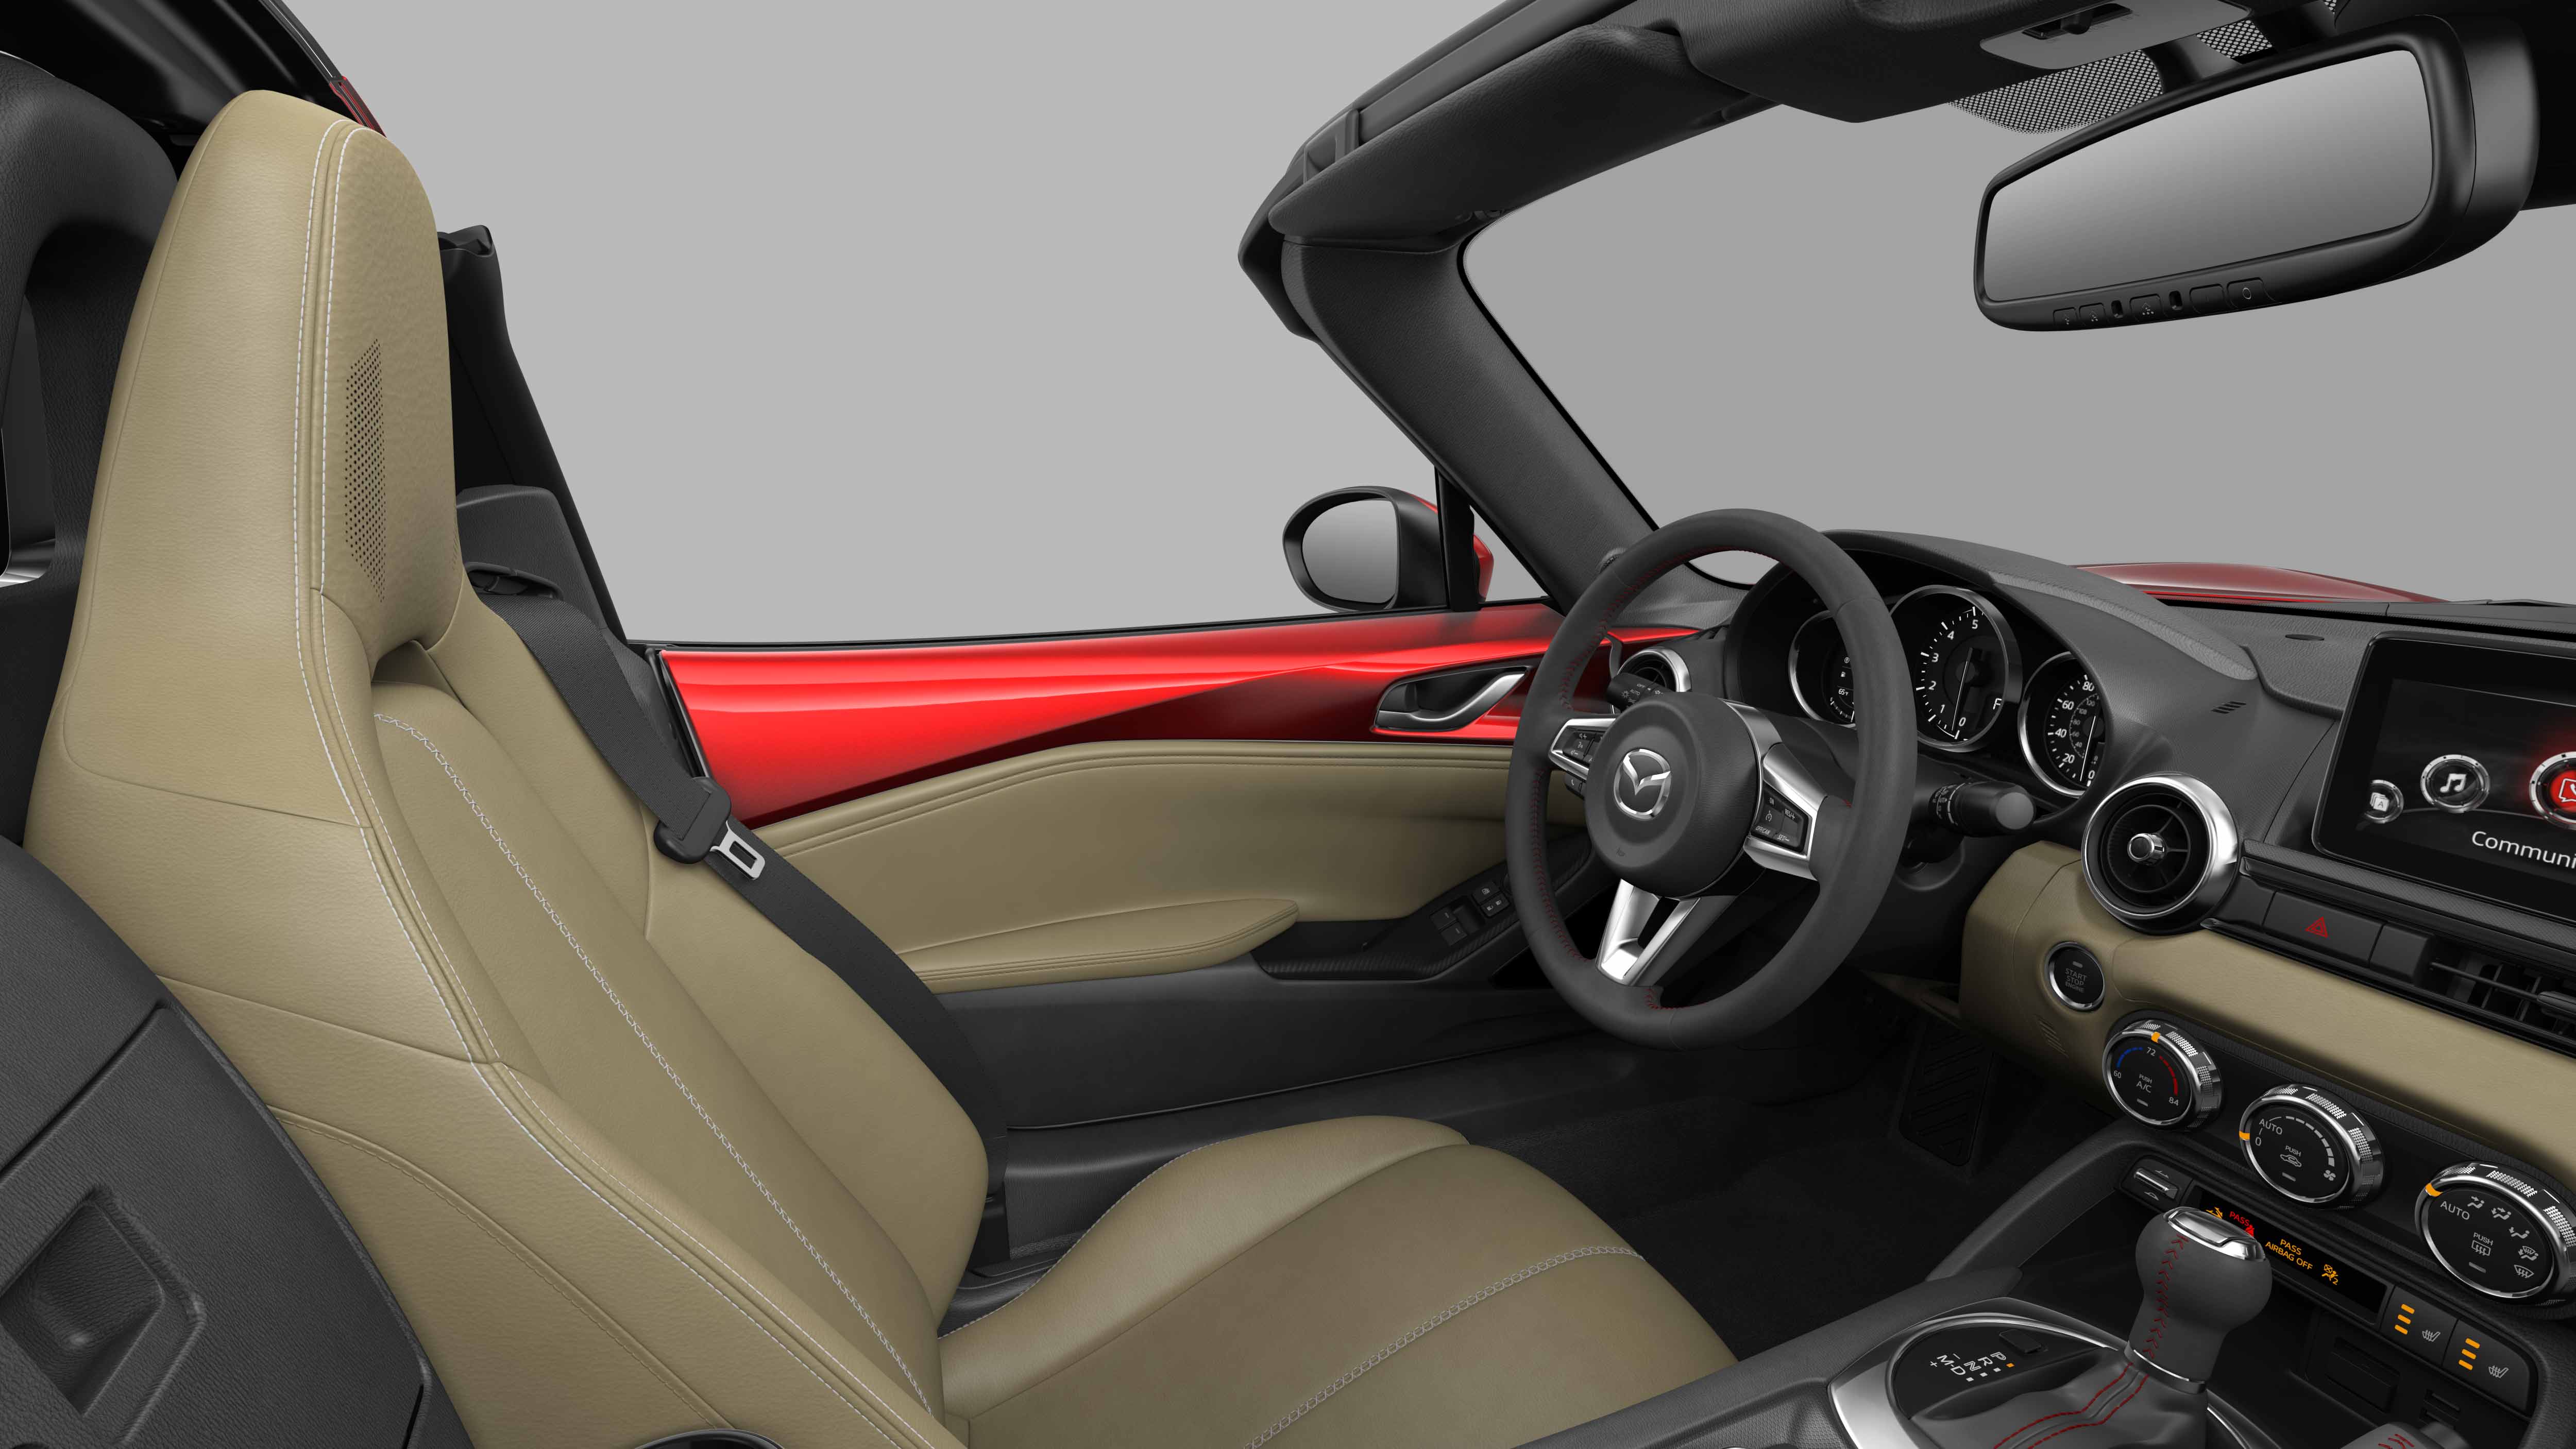 Mazdamx5rf-Sport Tan Leather